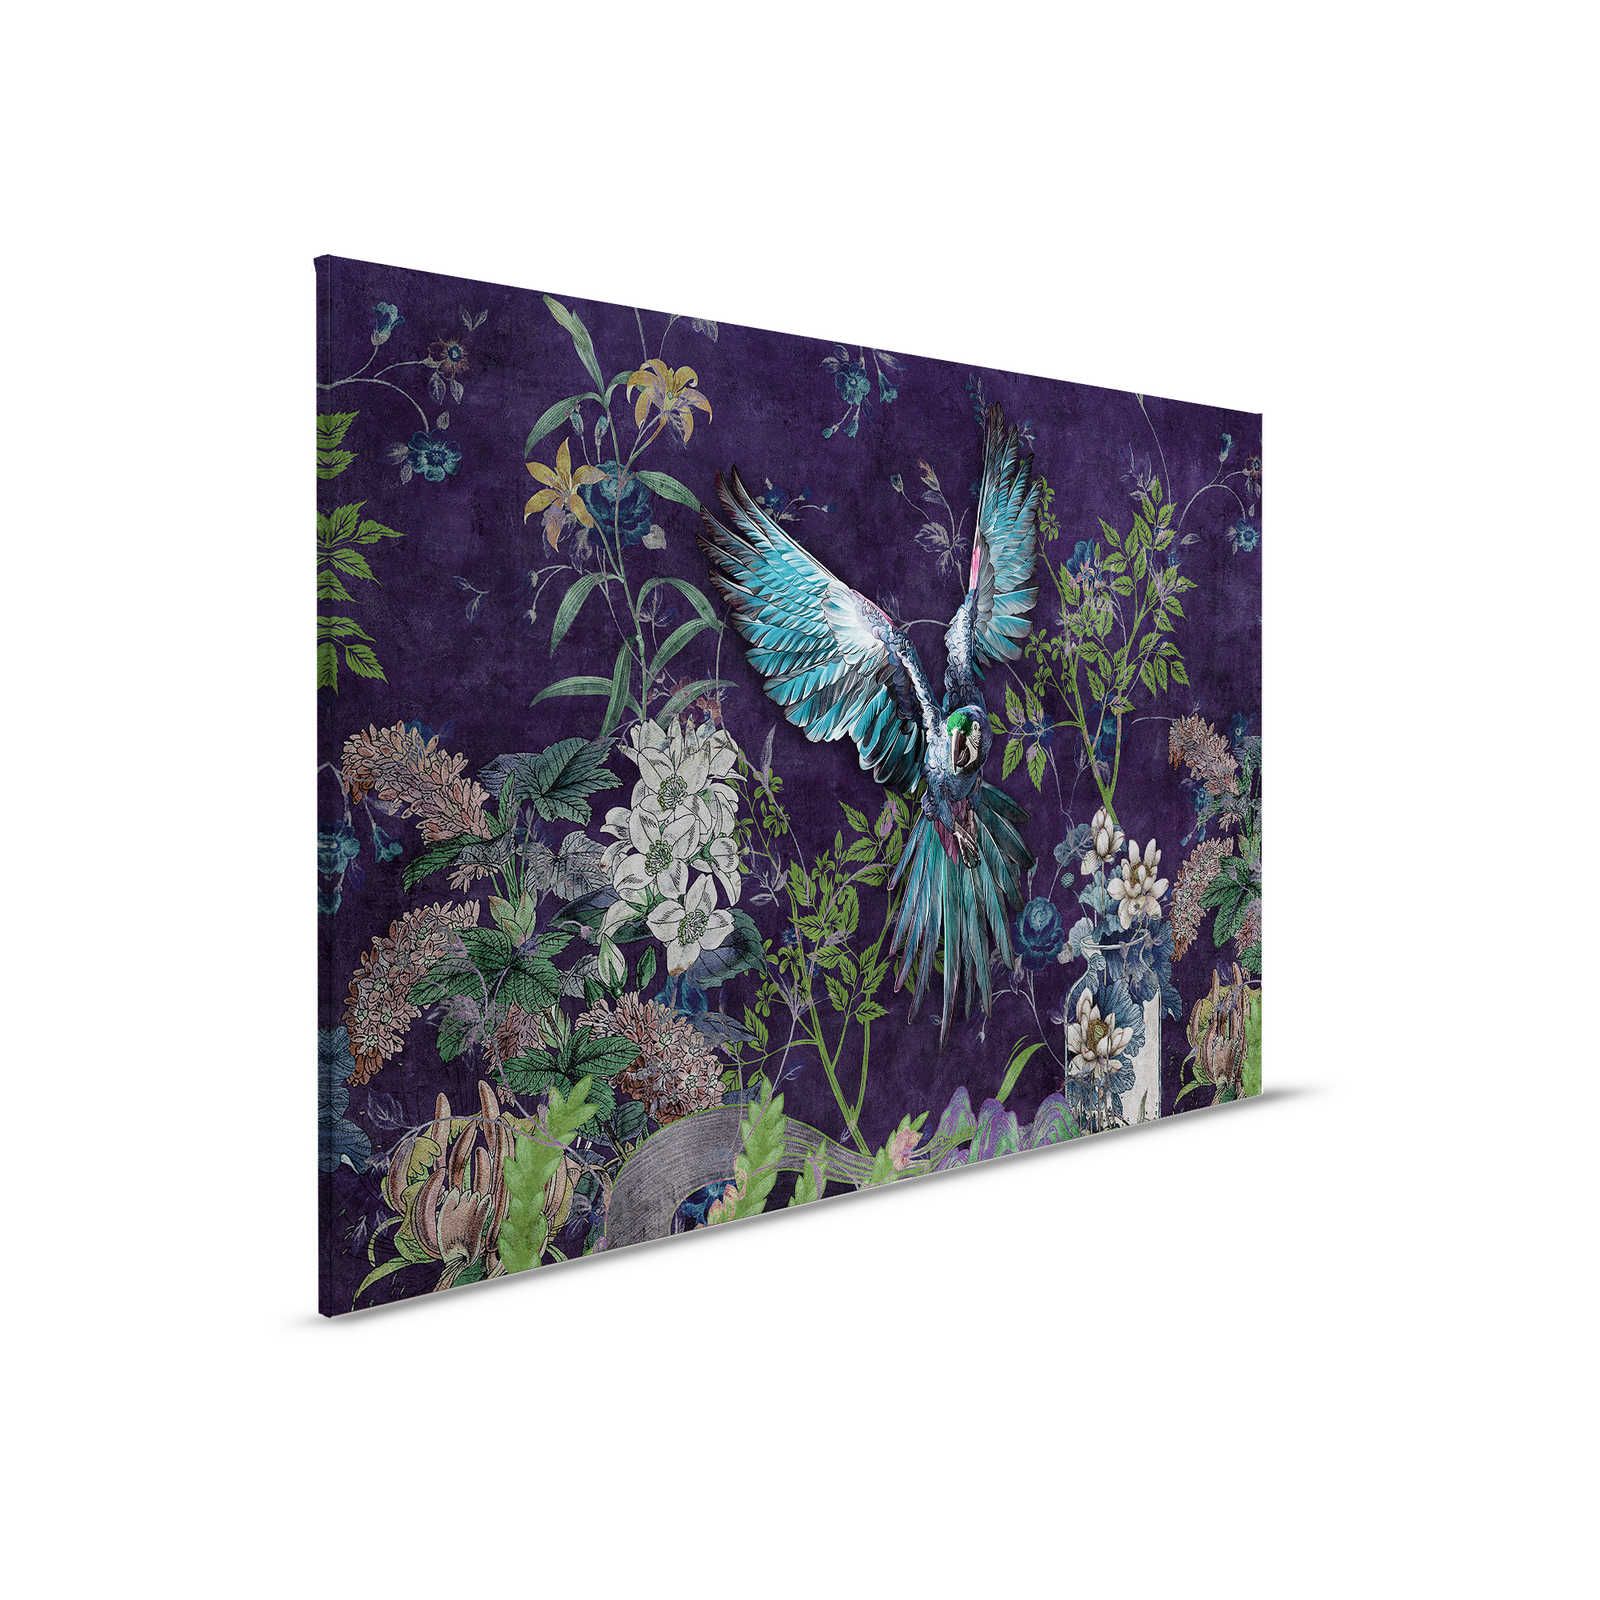 Tropical Hero 2 - Parrot Canvas painting Flowers & Black Background - 0.90 m x 0.60 m
